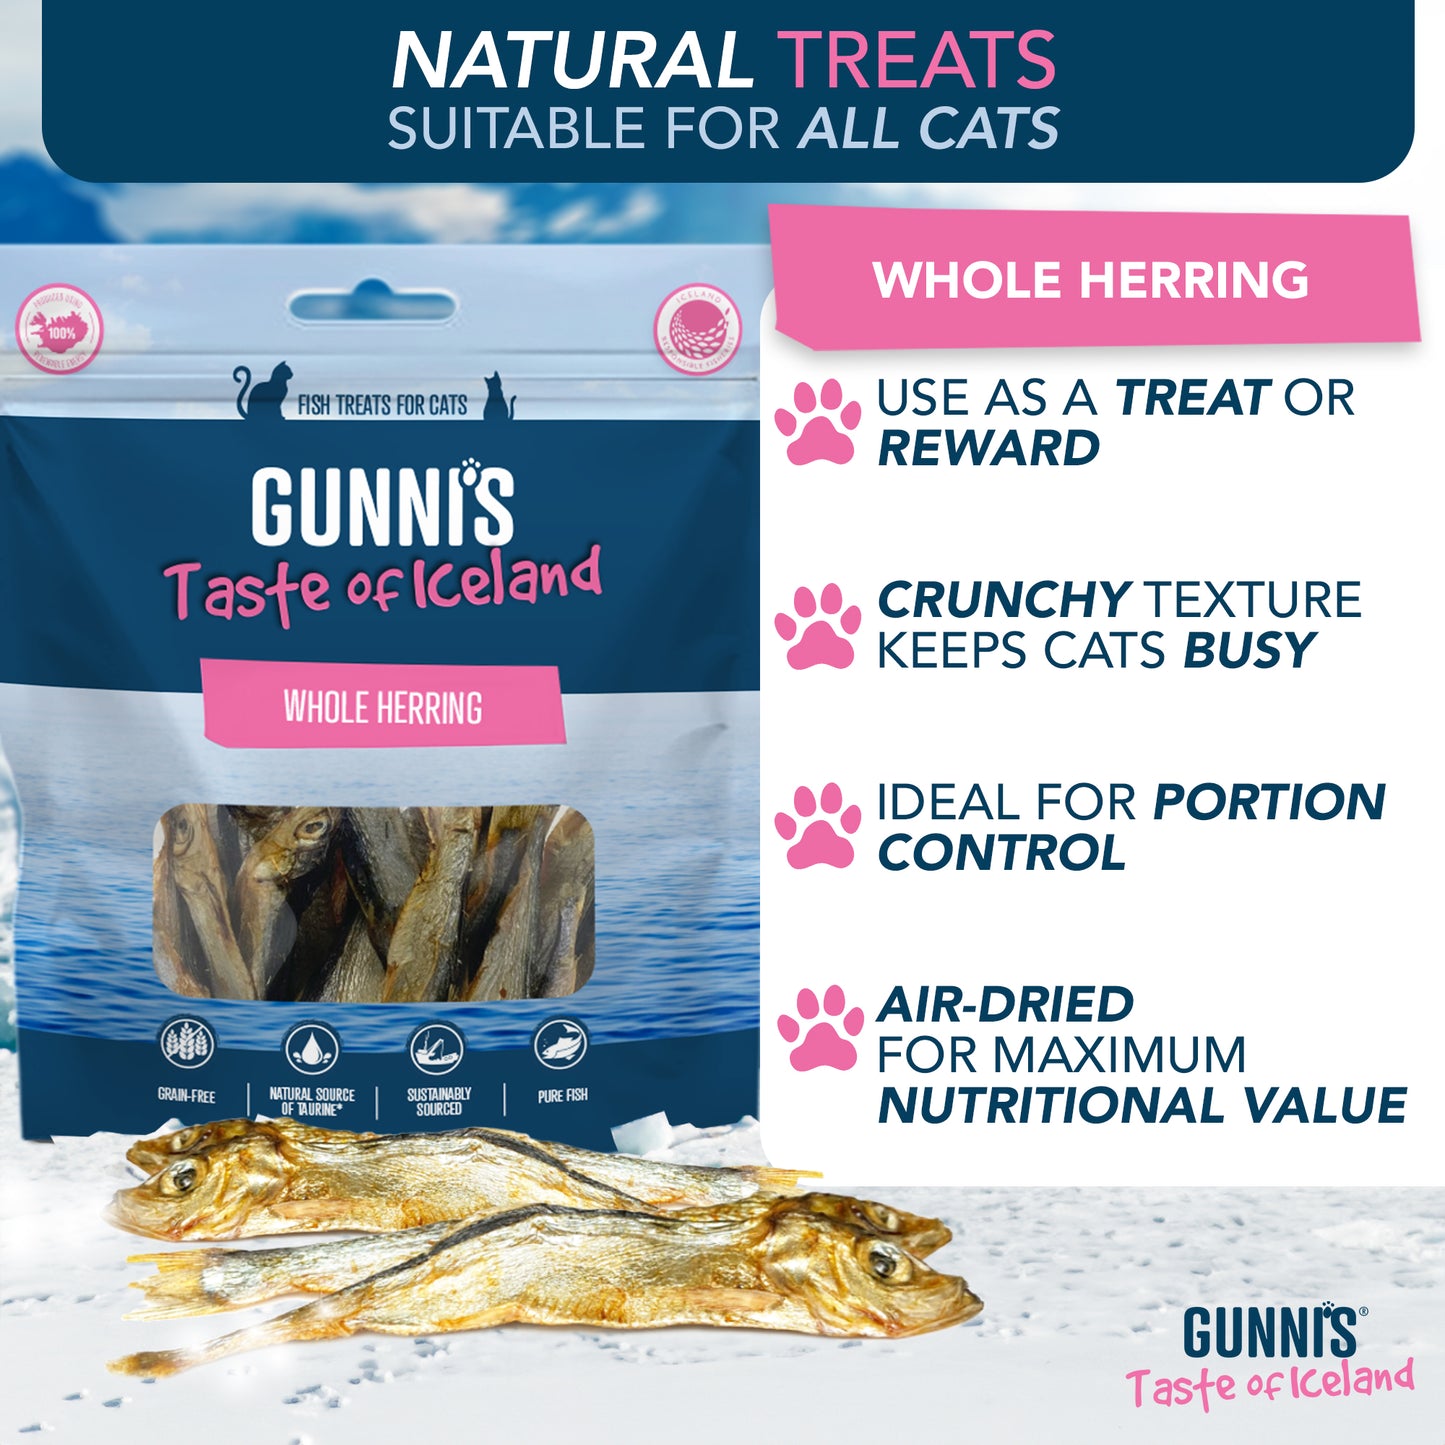 Gunnis Whole Herring Natural Cat Treats, 42.5g